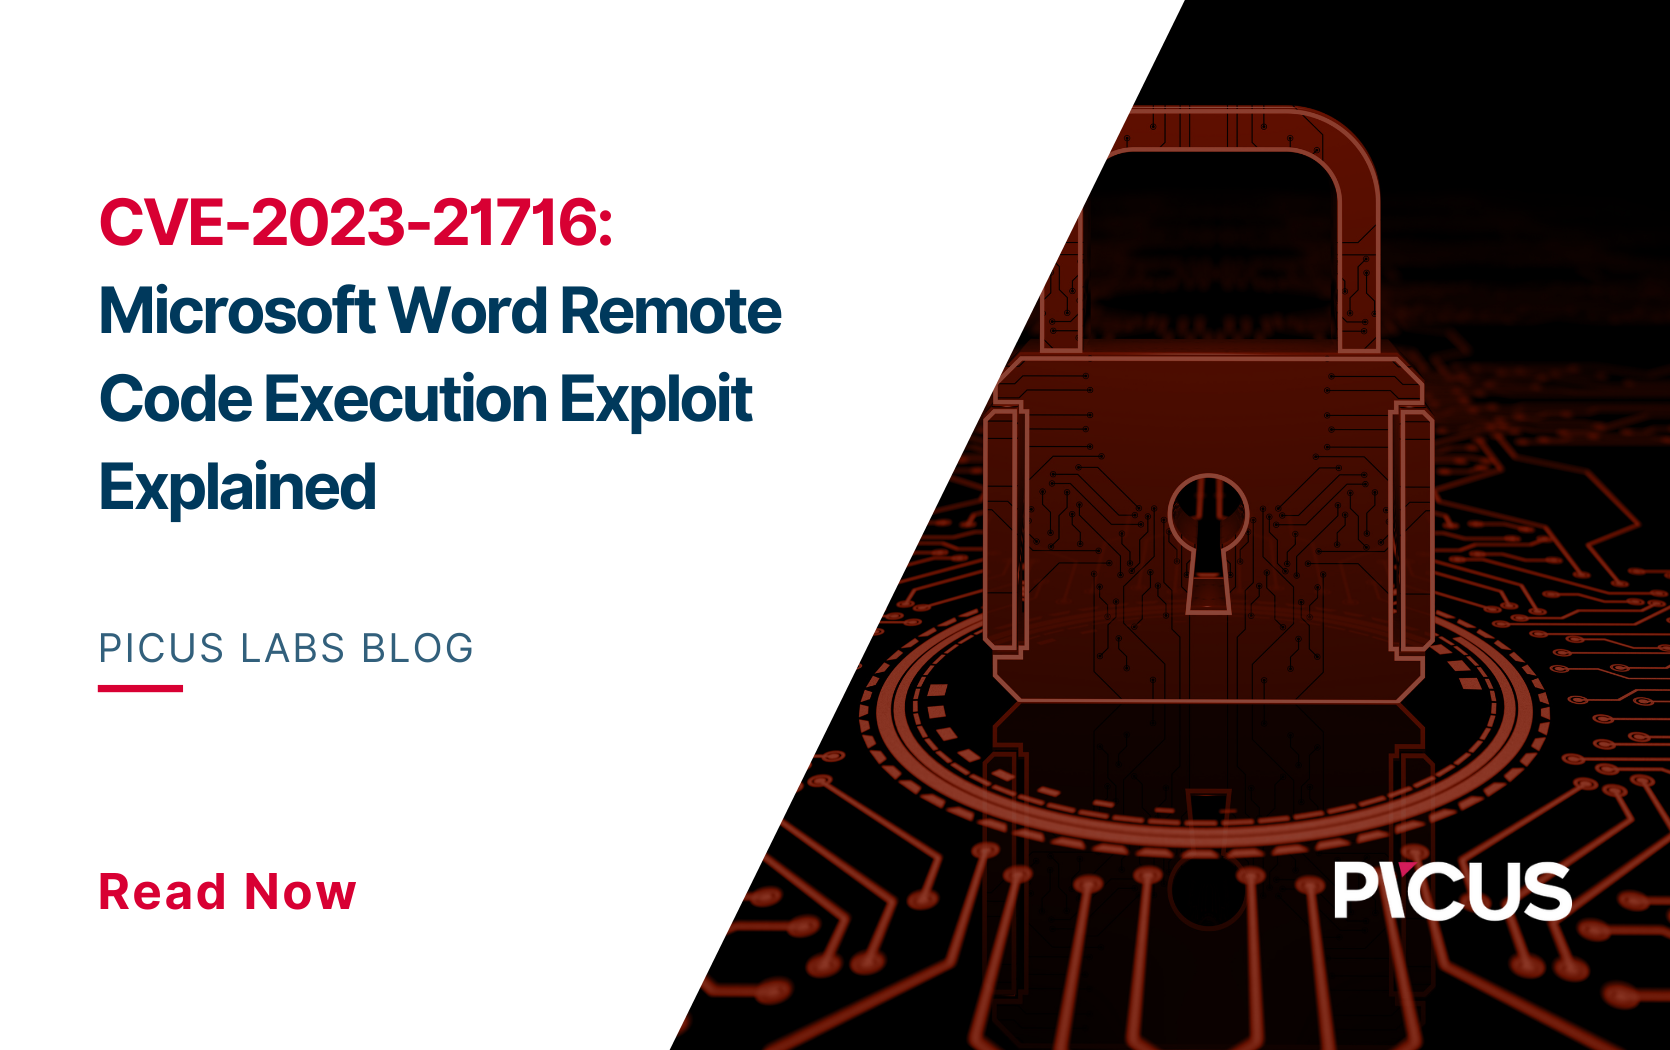 CVE-2023-21716: Microsoft Word Remote Code Execution Exploit Explained